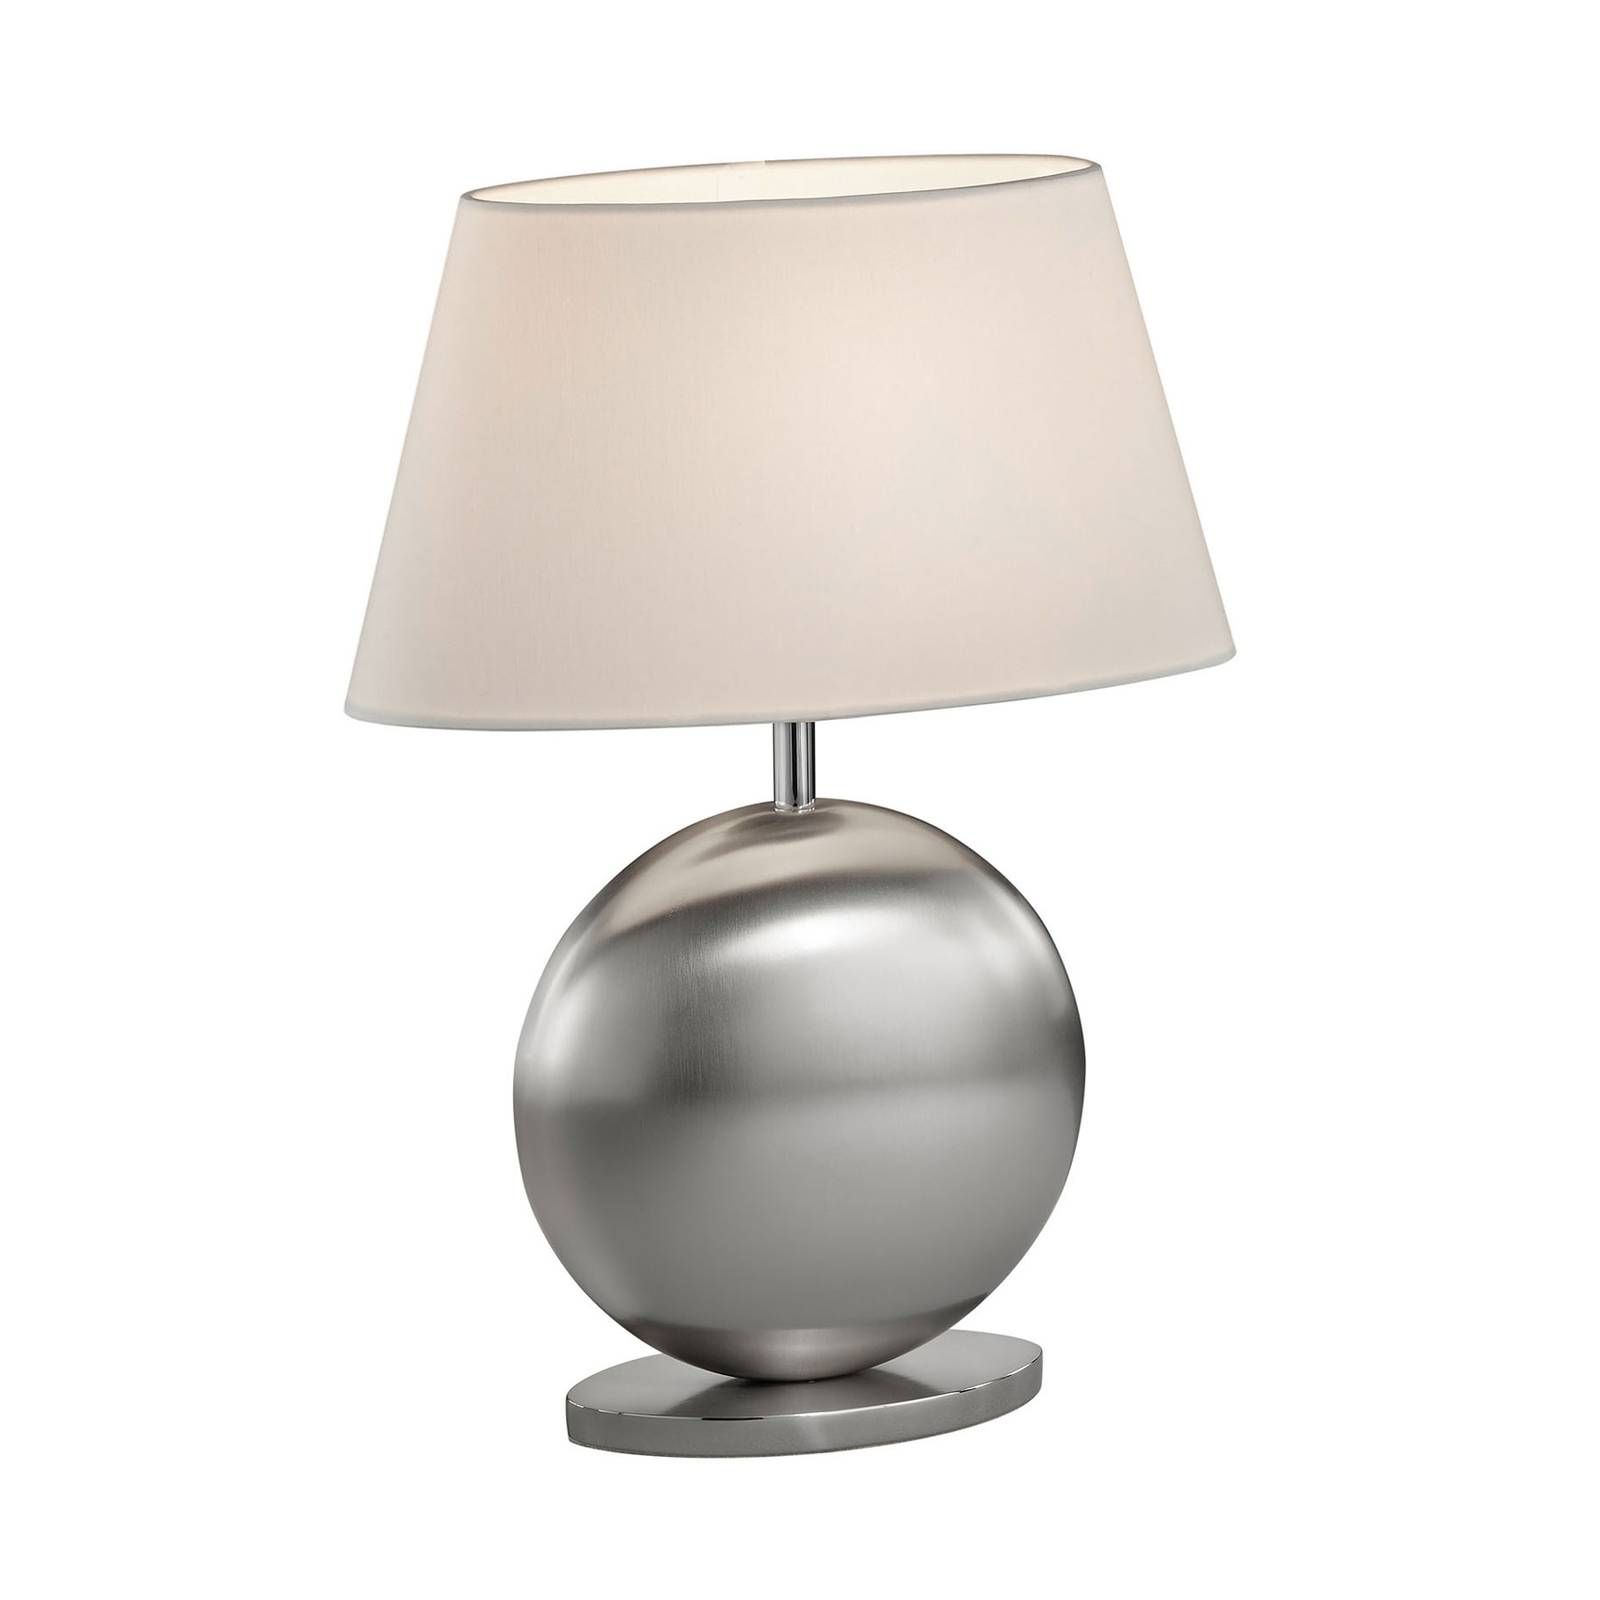 BANKAMP Asolo stolná lampa biela/nikel výška 41 cm, Obývacia izba / jedáleň, chintz, hliník, E14, 60W, P: 28 cm, L: 14 cm, K: 41cm